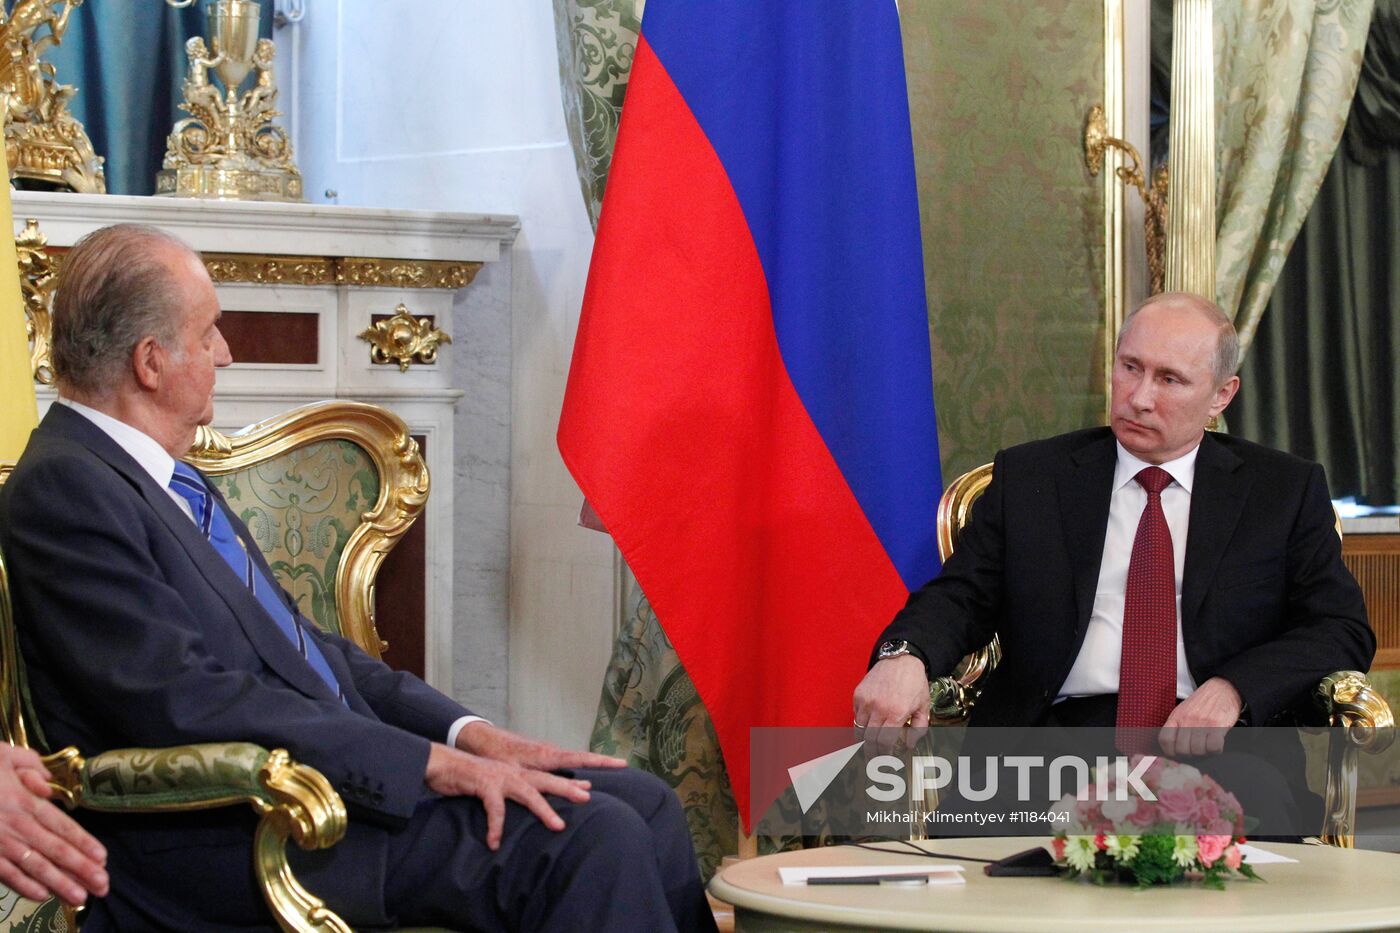 Vladimir Putin meets with Spanish King Juan Carlos I in Moscow